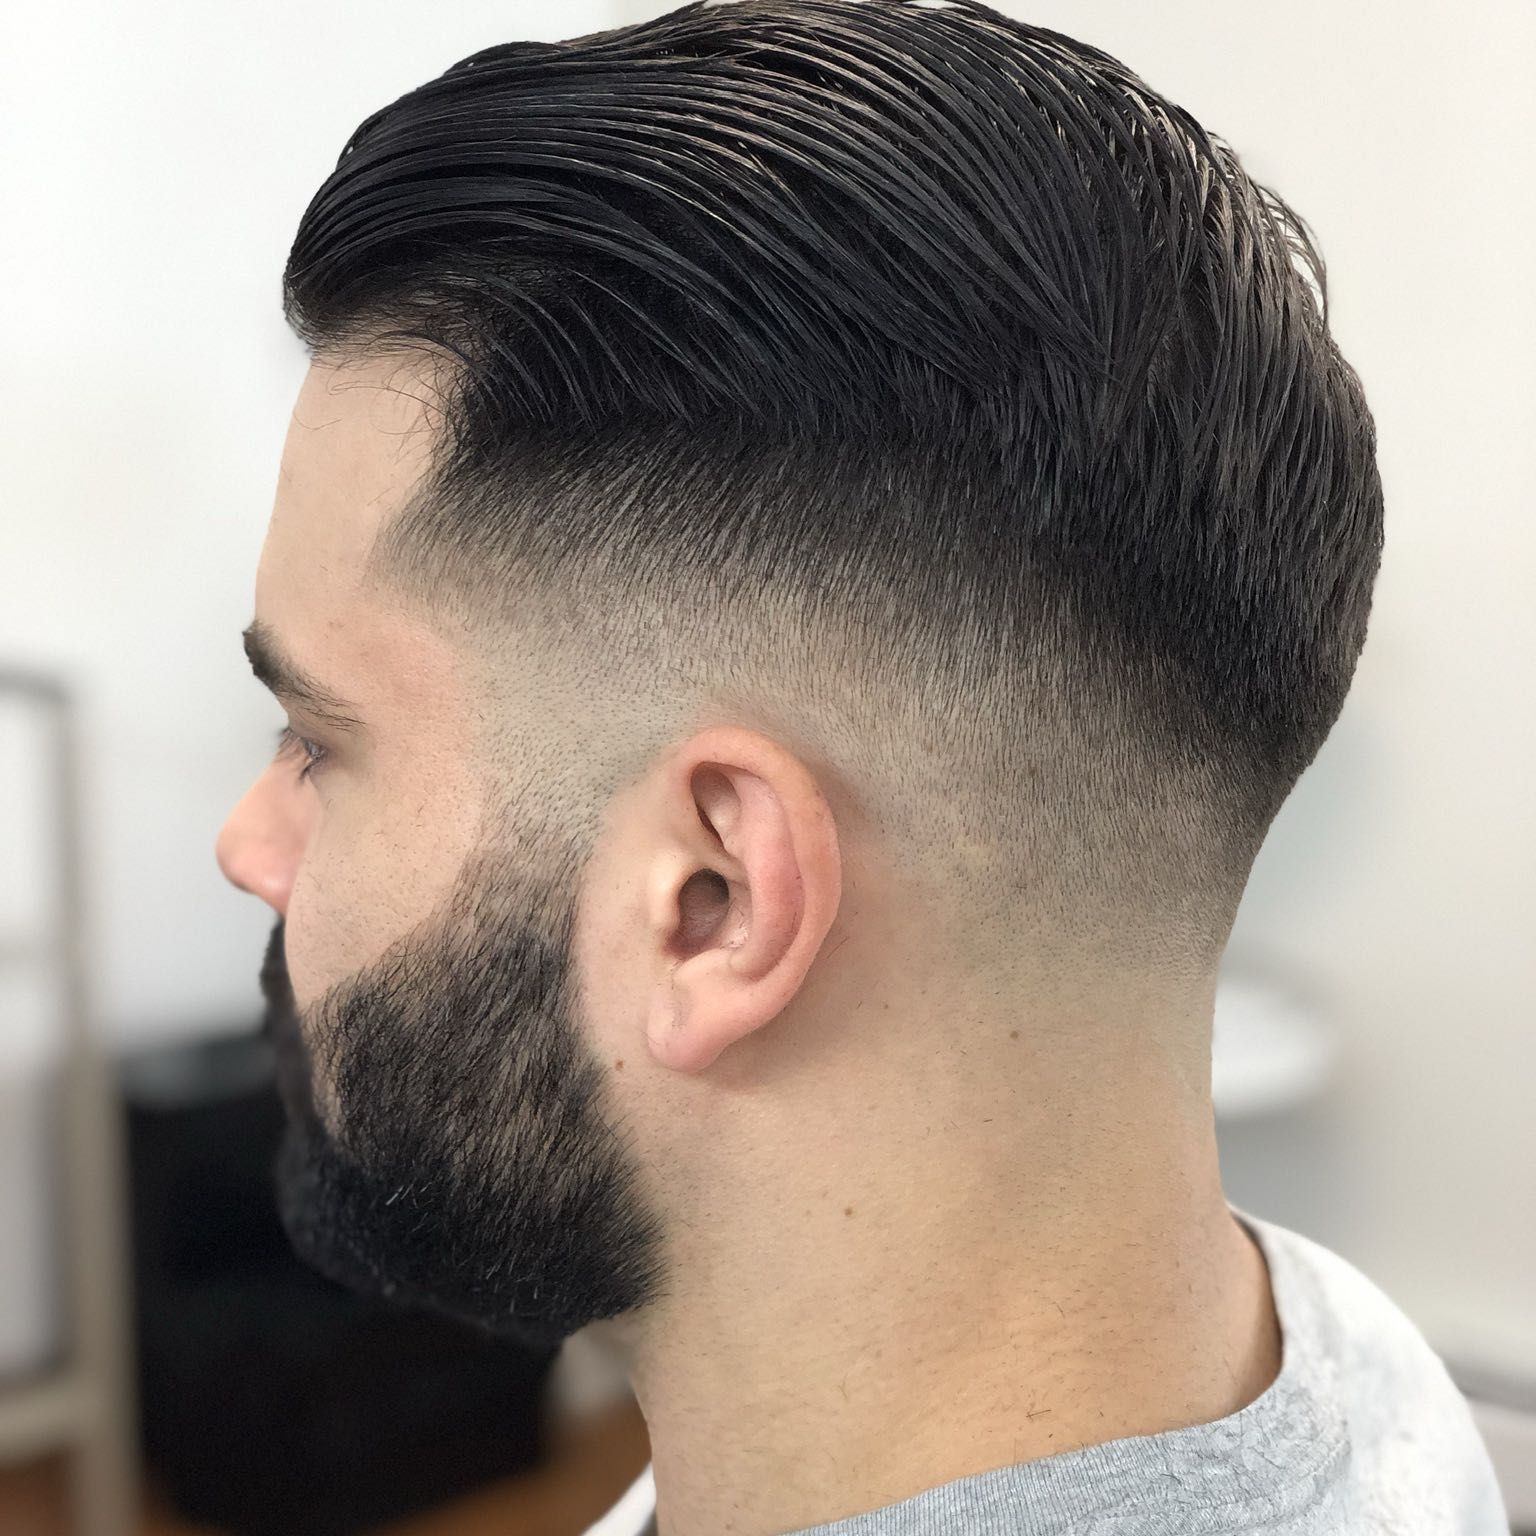 Skin-fade with cut, beard shave/trim portfolio